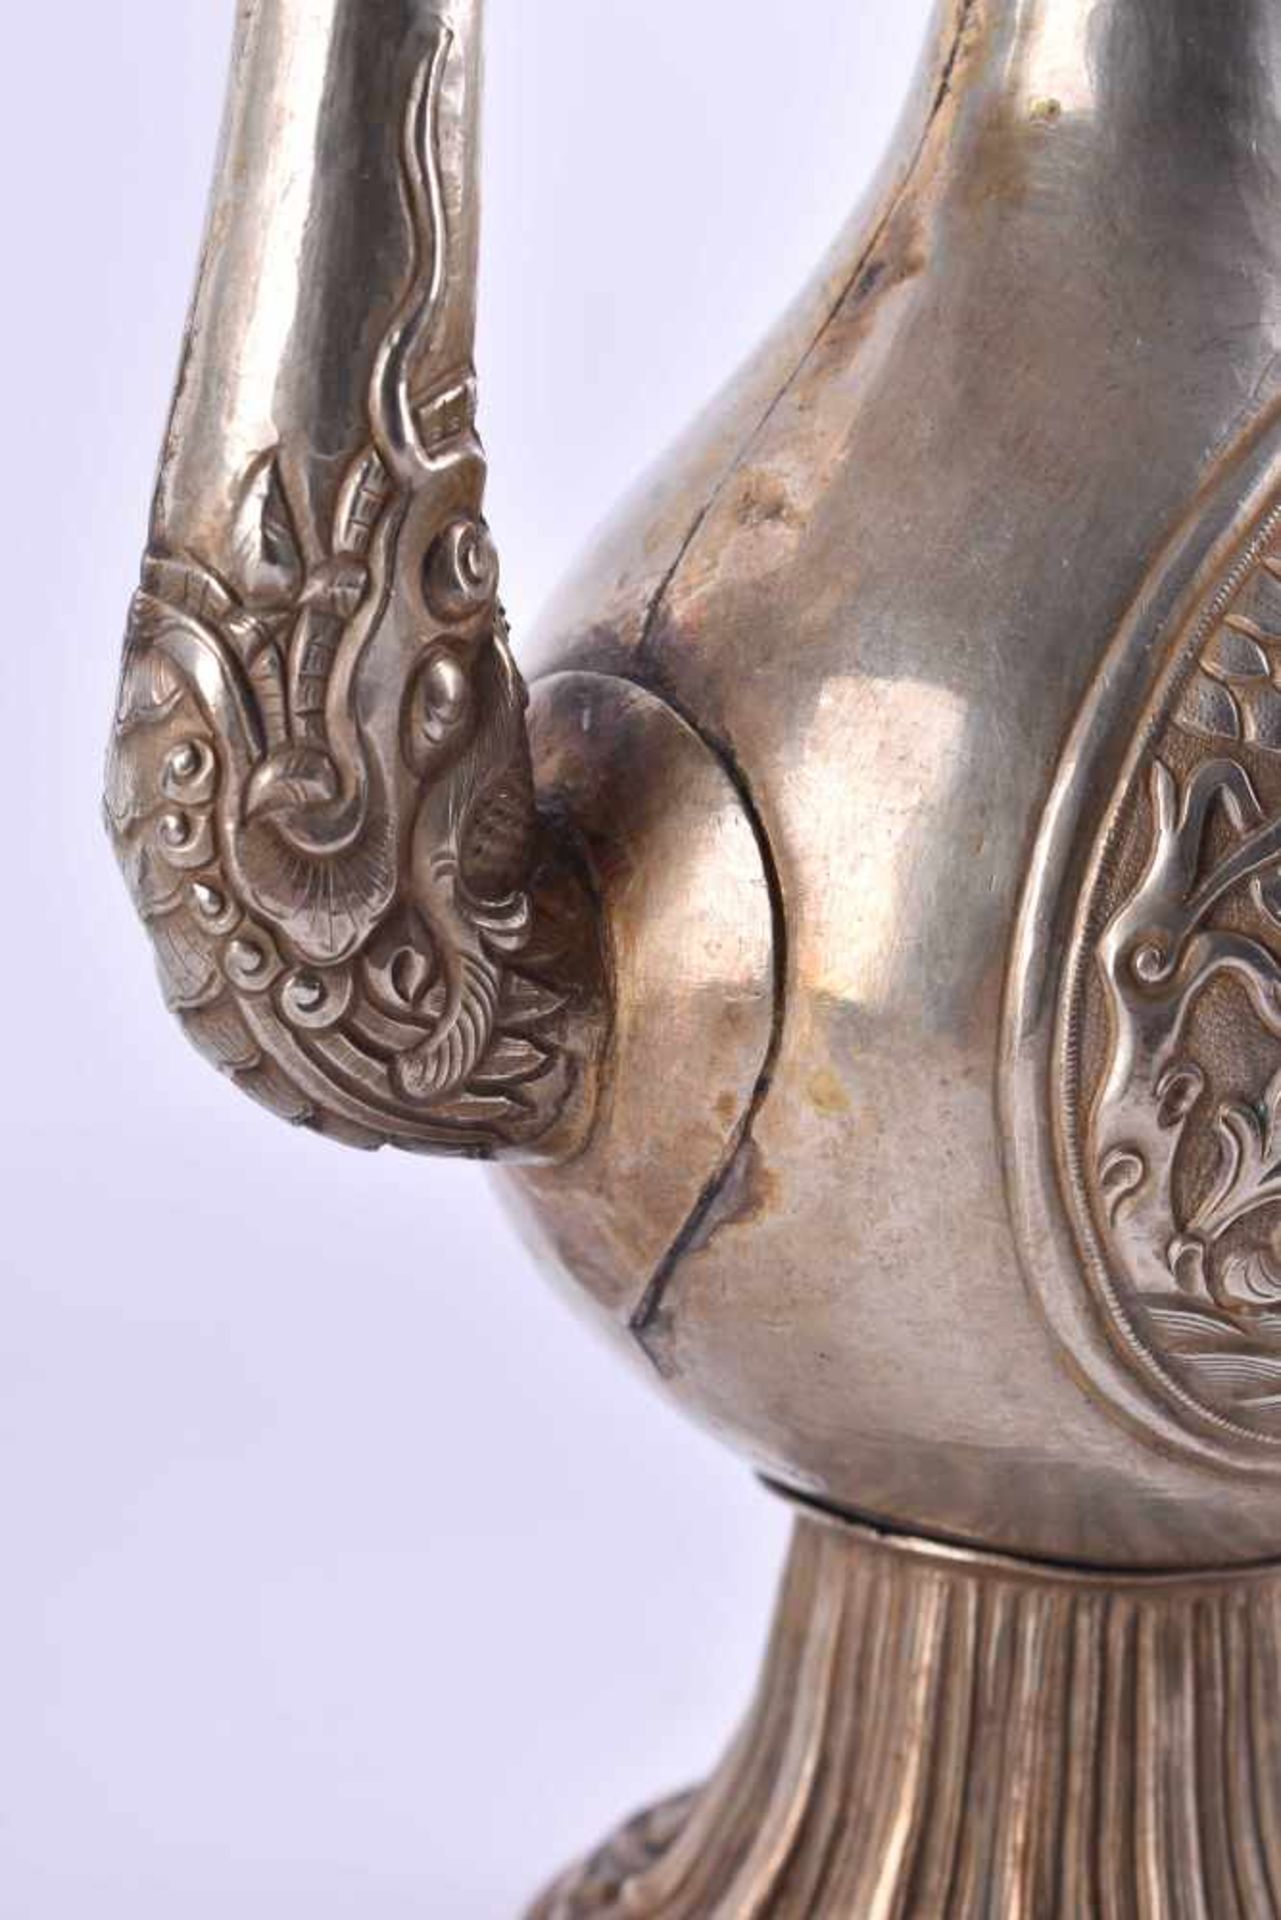 Silver pot Tibet 19th century - Image 5 of 5